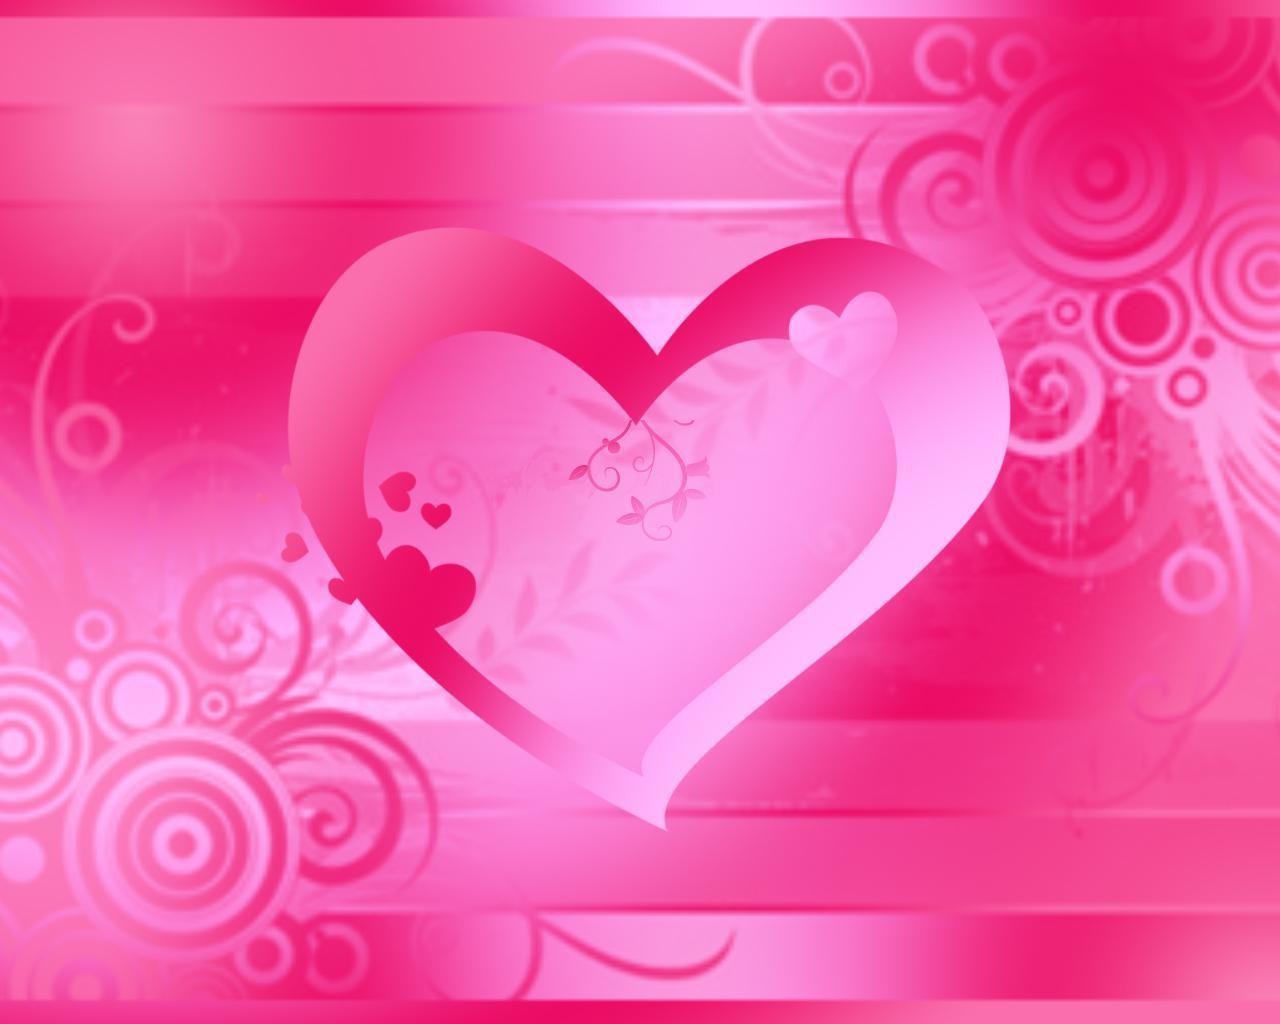 Heart pink free desktop background wallpaper image